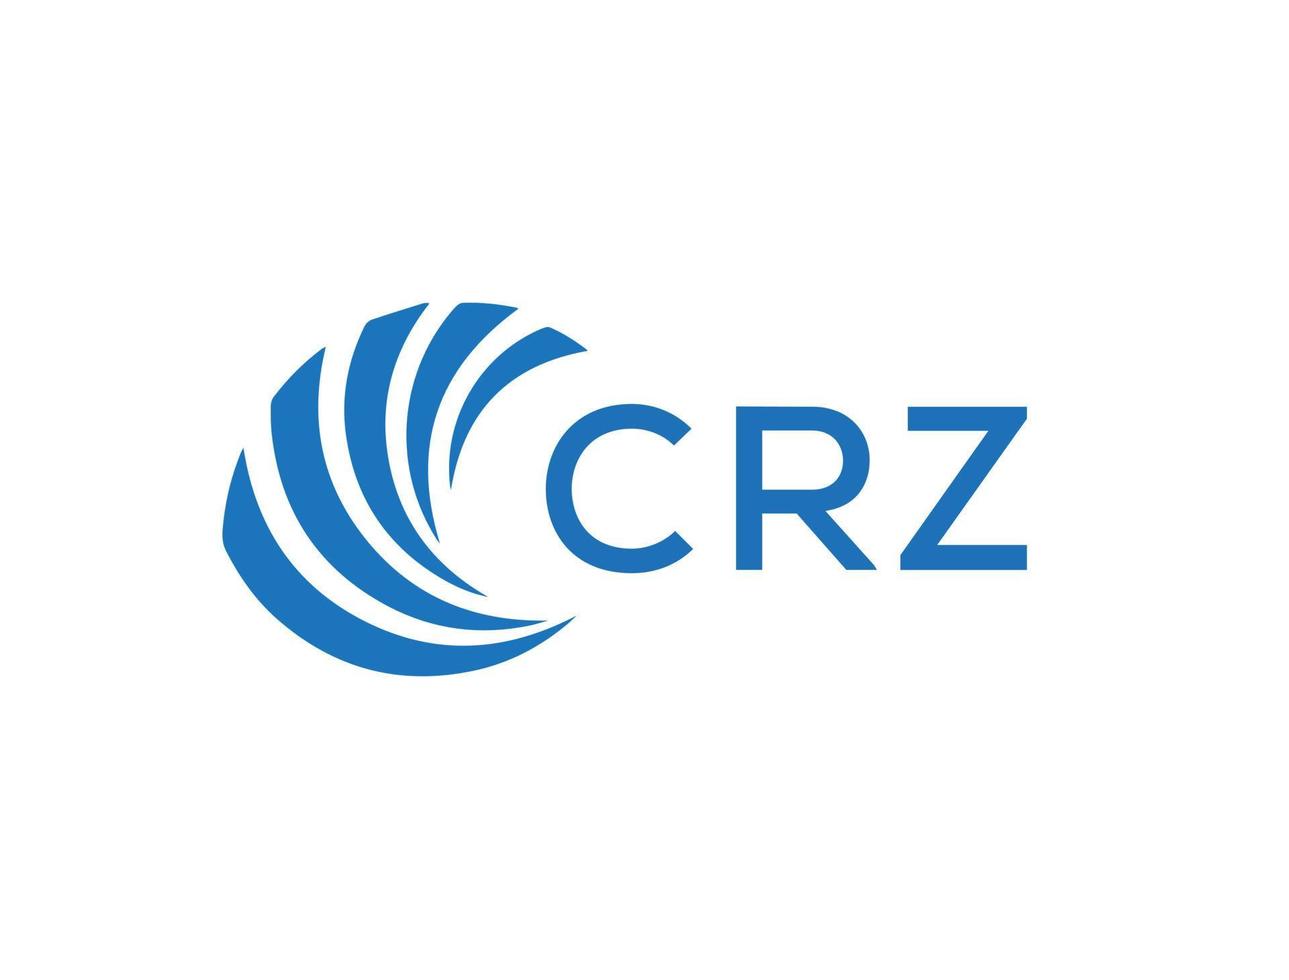 crz brev logotyp design på vit bakgrund. crz kreativ cirkel brev logotyp begrepp. crz brev design. vektor